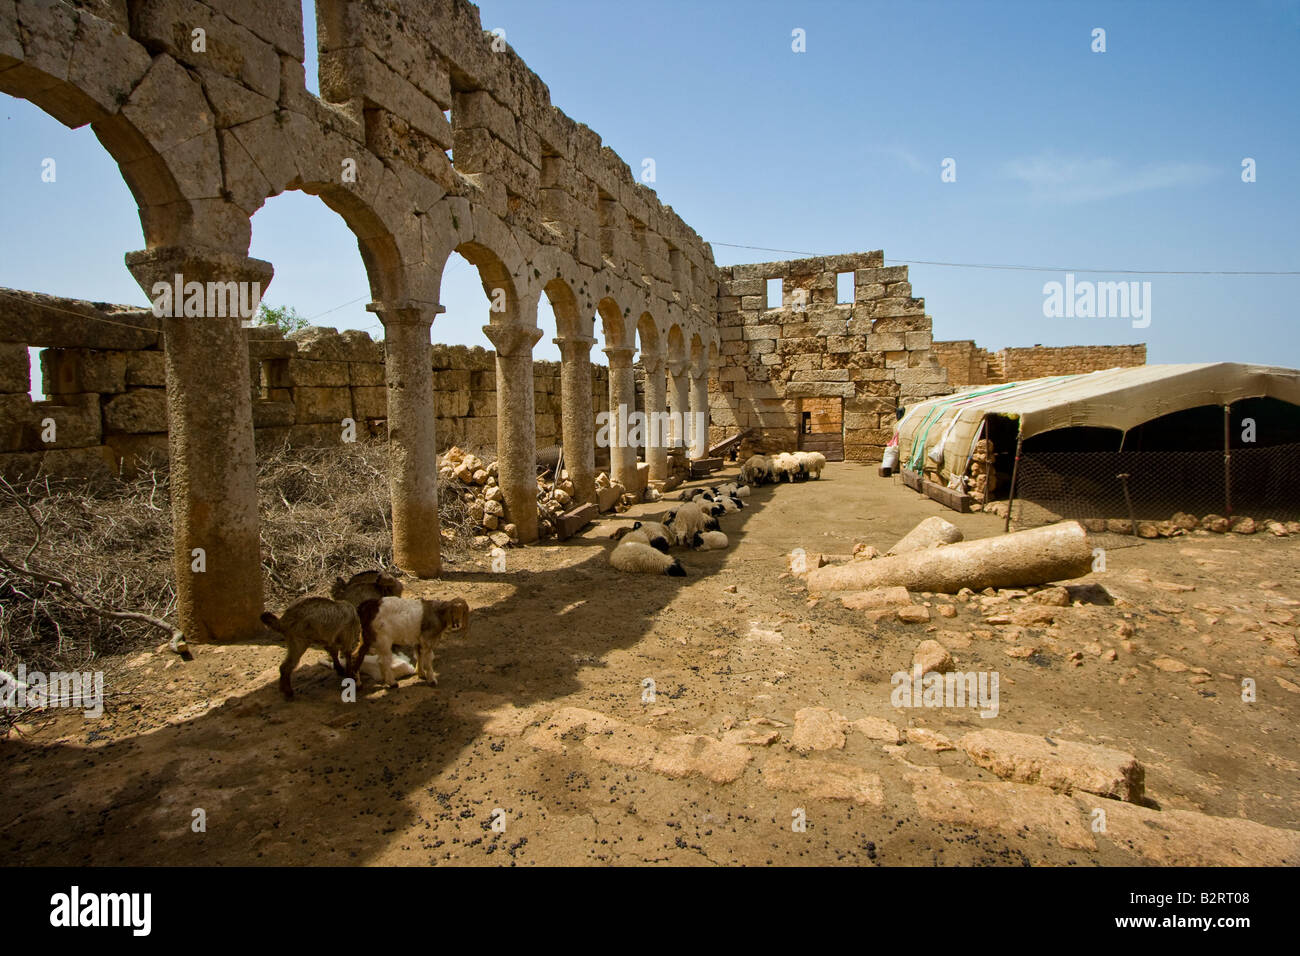 Tenda Beduin all'interno bizantina cattedrale romana rovina a Ruweiha città morta in Siria Foto Stock